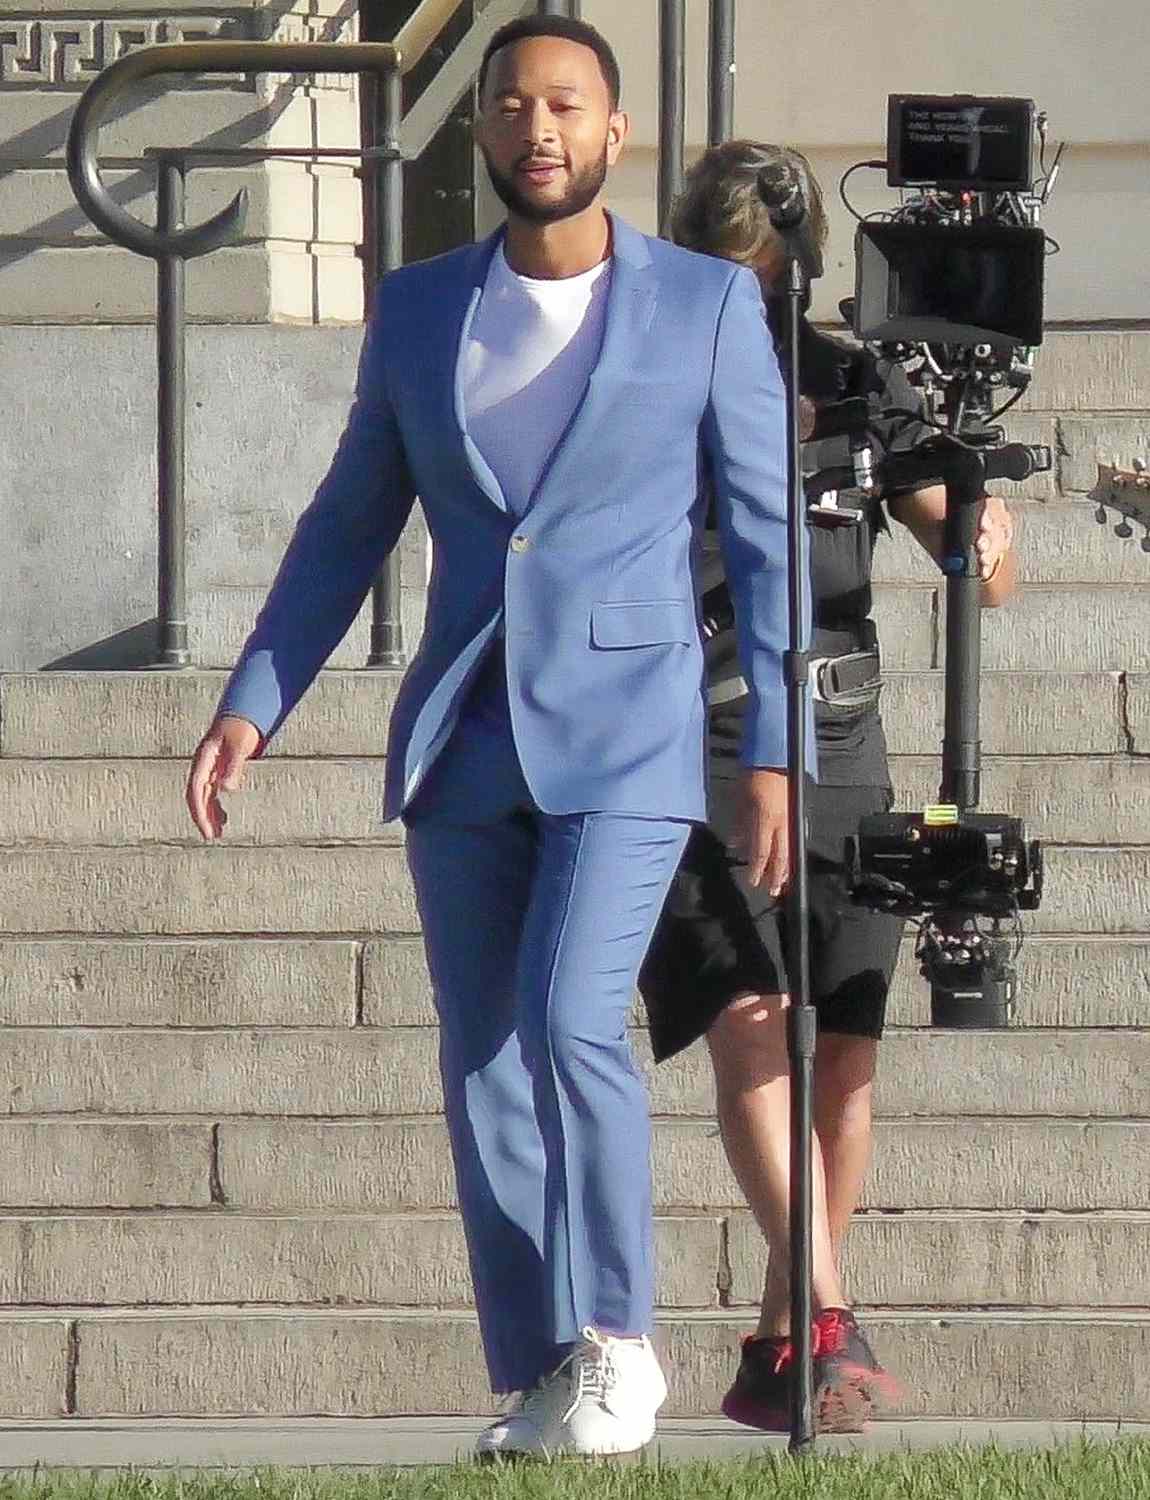 John Legend rocks a blue suit while shooting a music video